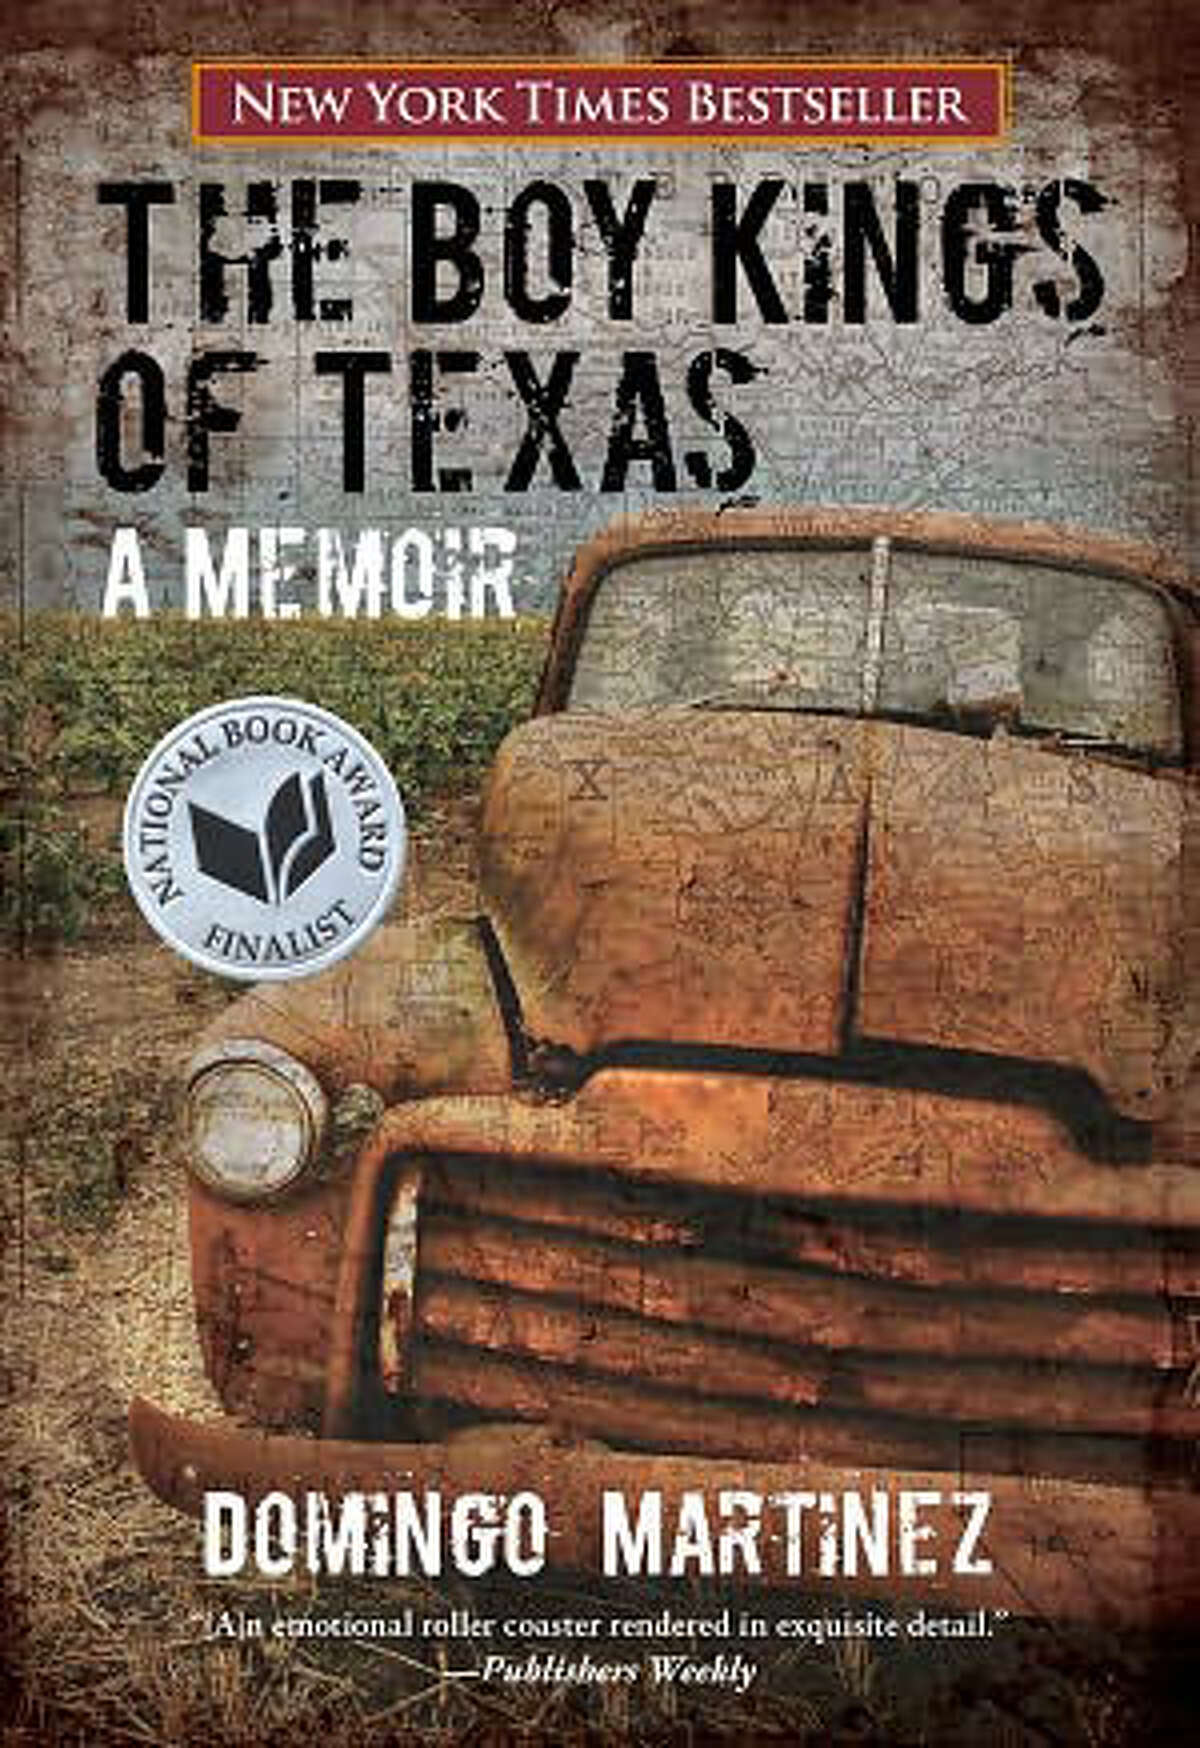 "The Boy Kings of Texas" by Domingo Martinez